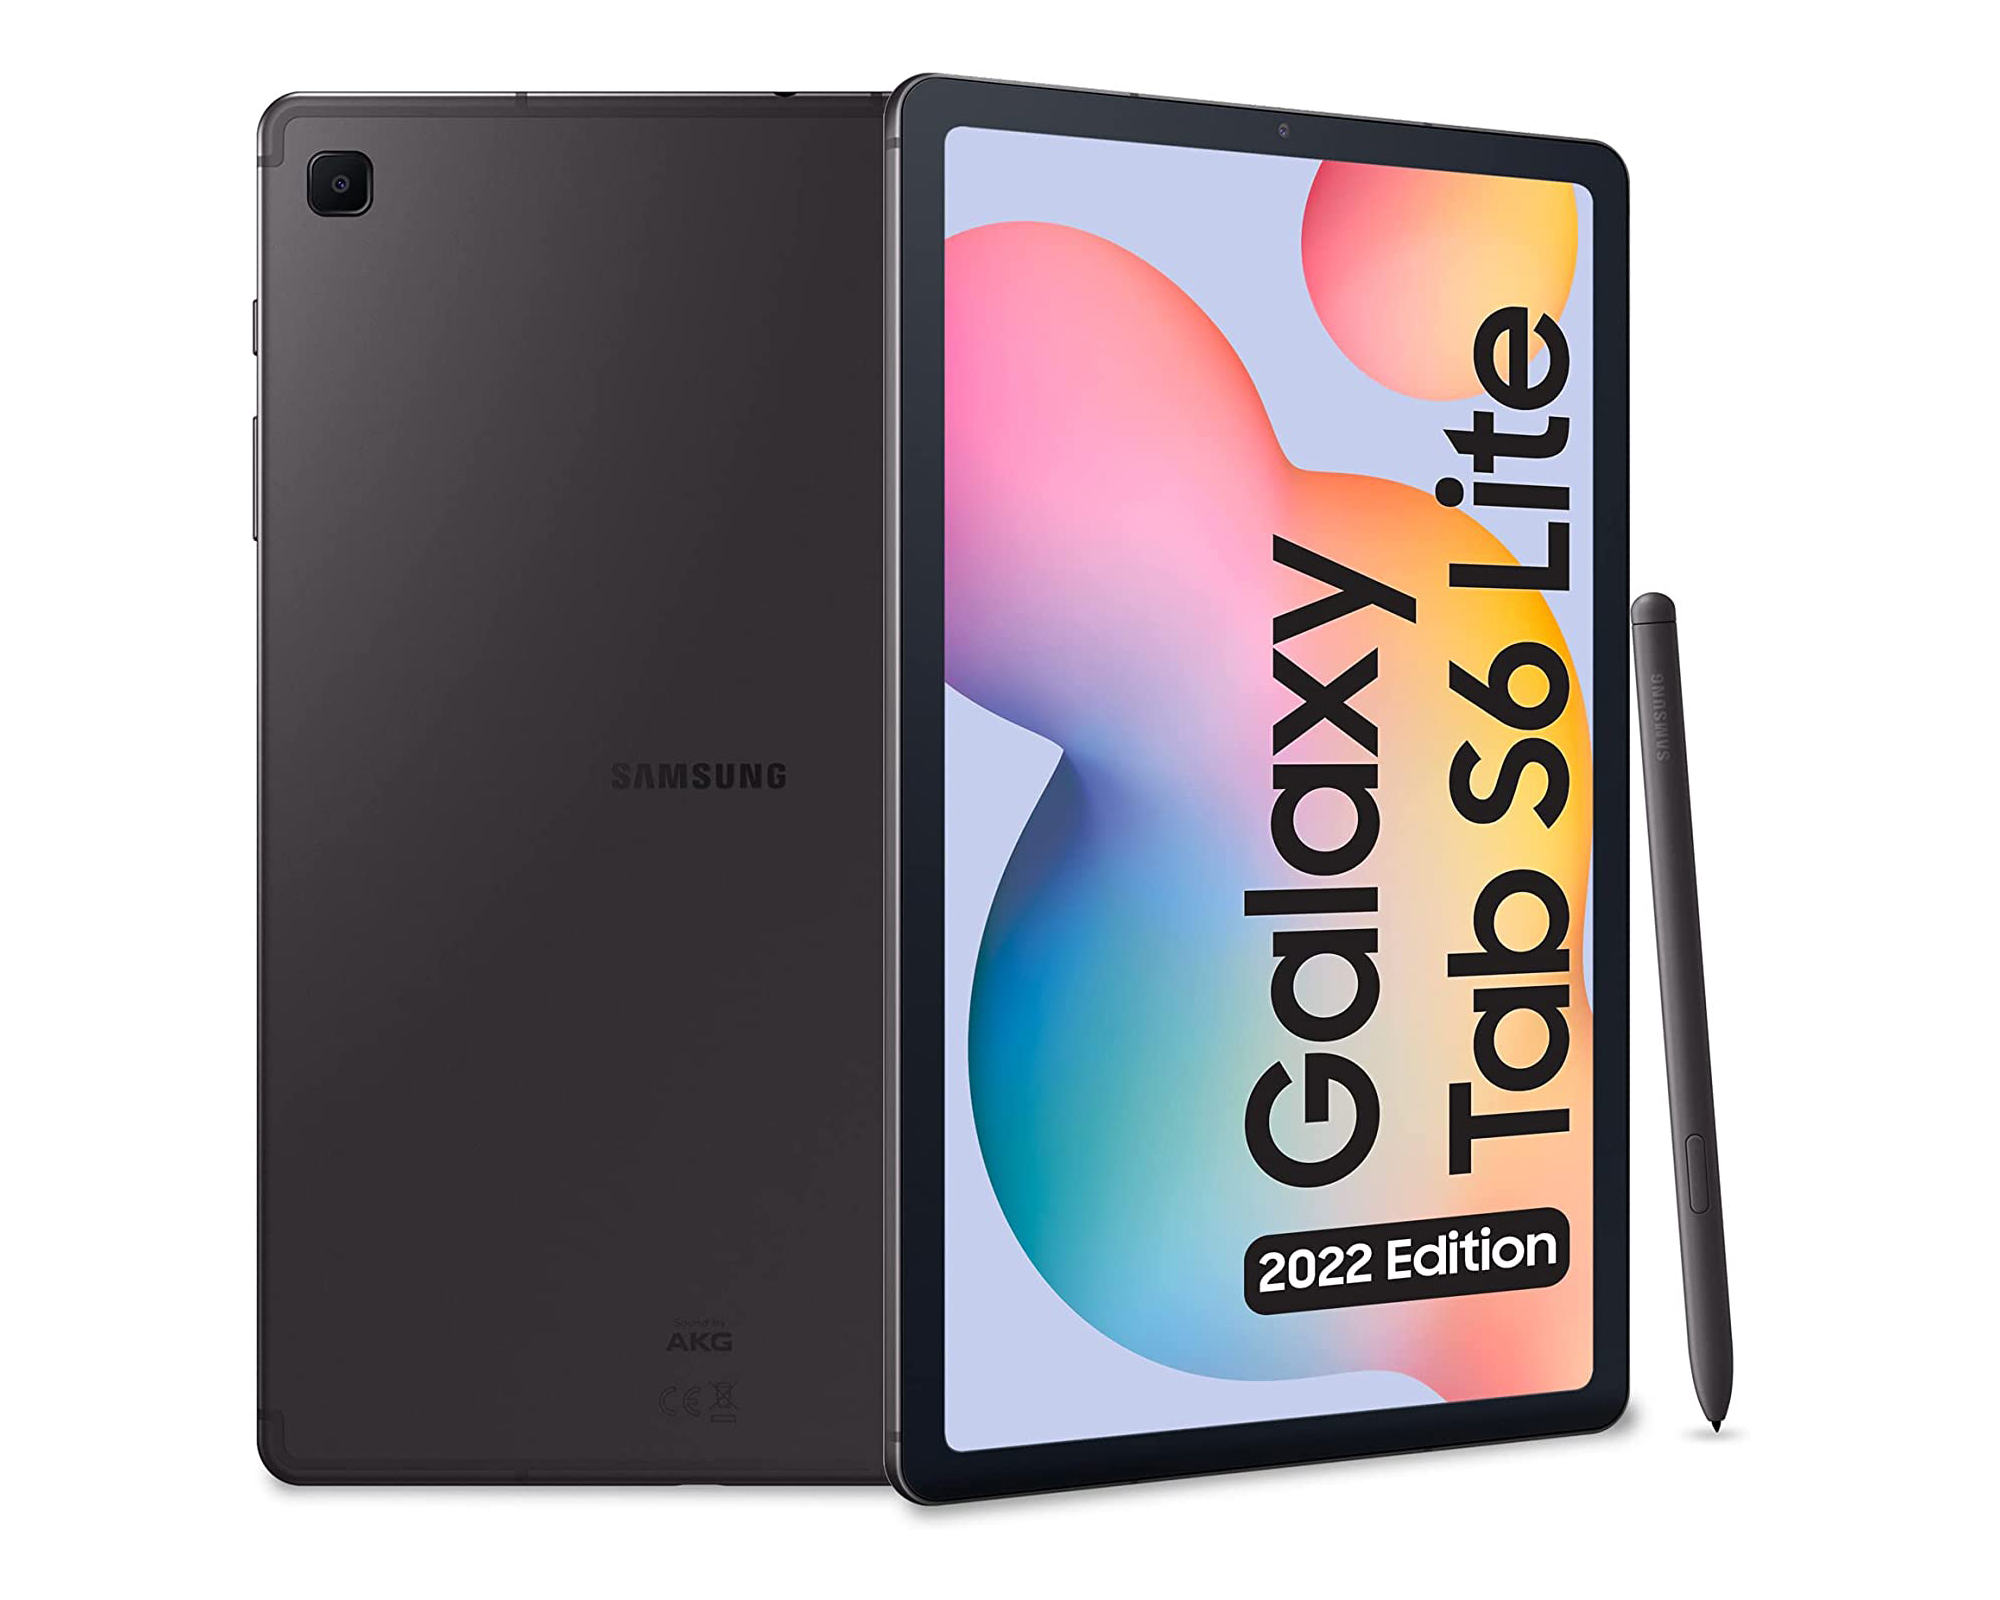 Samsung Galaxy Tab S6 Lite (2022) Amazon enthüllt vorab